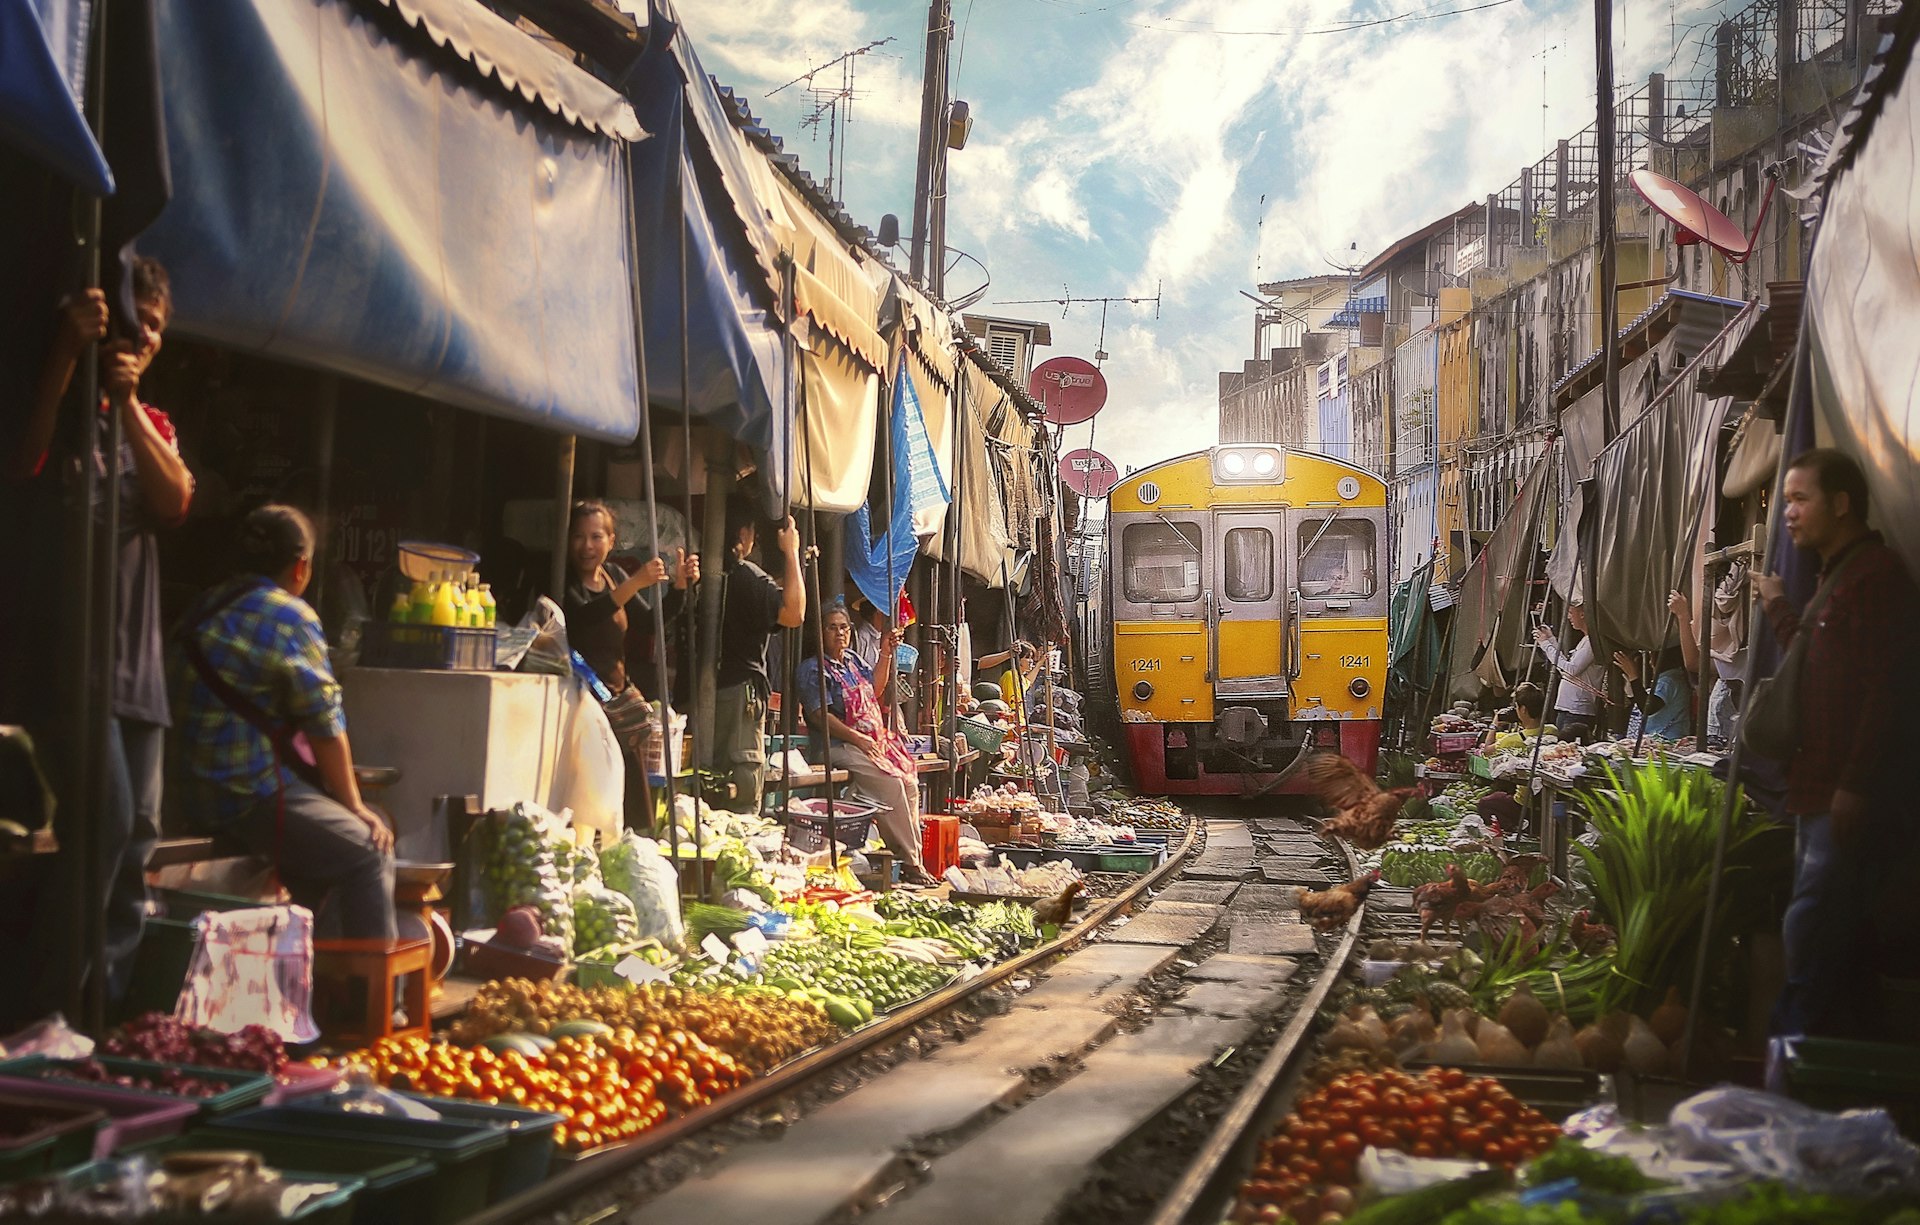 The Bangkok train arriving at the Samut Sakhon Railway Market 